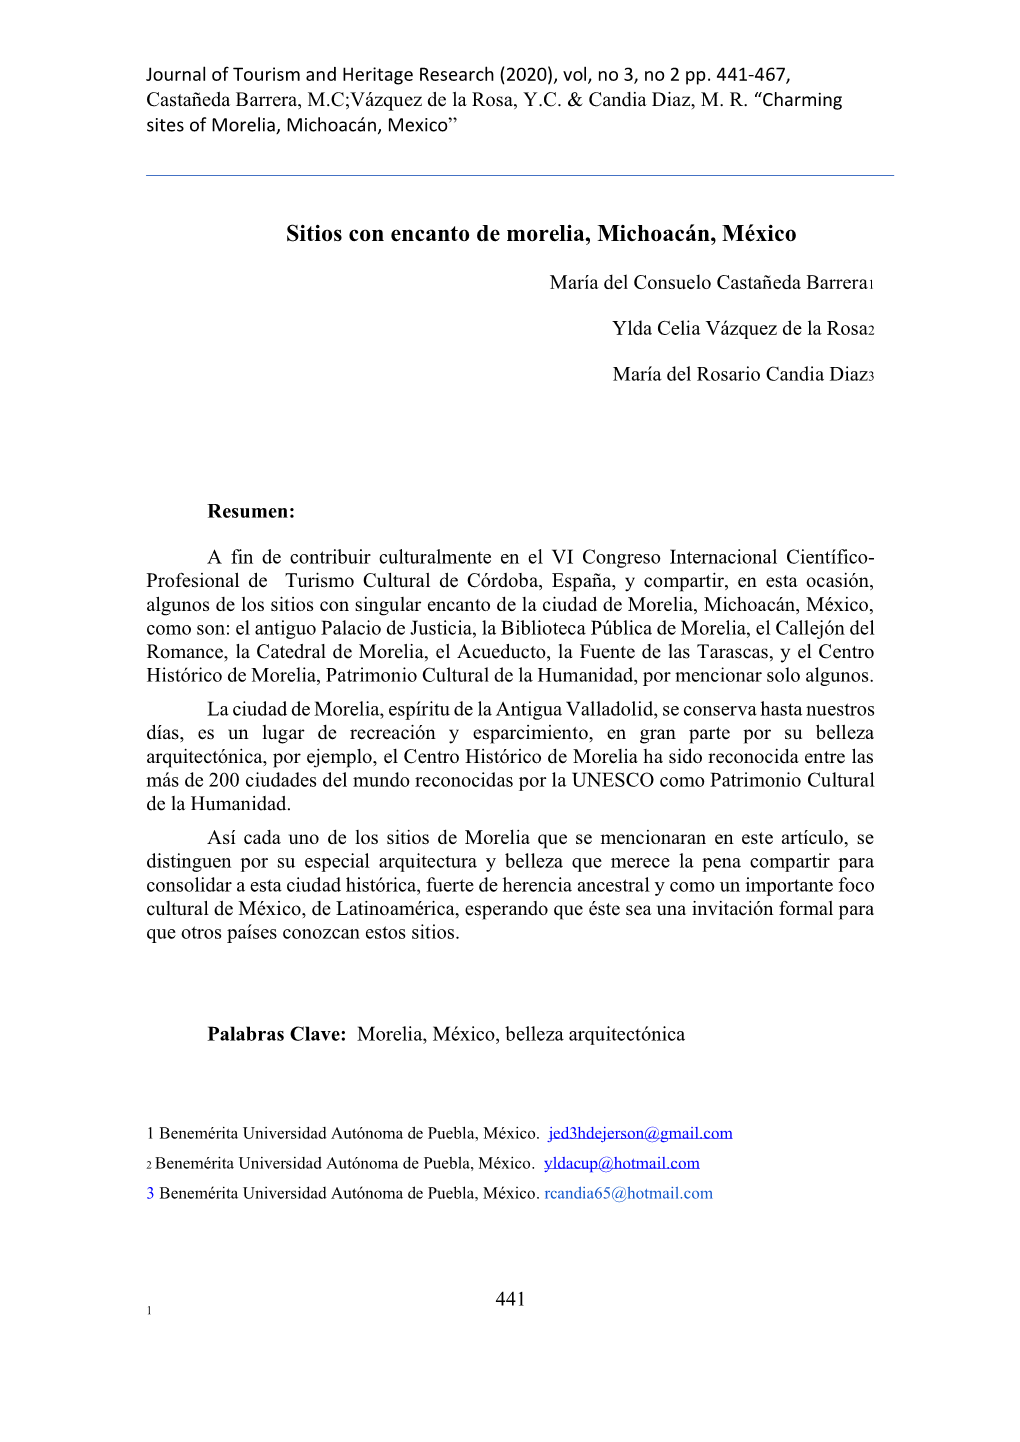 (2020), Vol, No 3, No 2 Pp. 441-467, Castañeda Barrera, M.C;Vázquez De La Rosa, Y.C